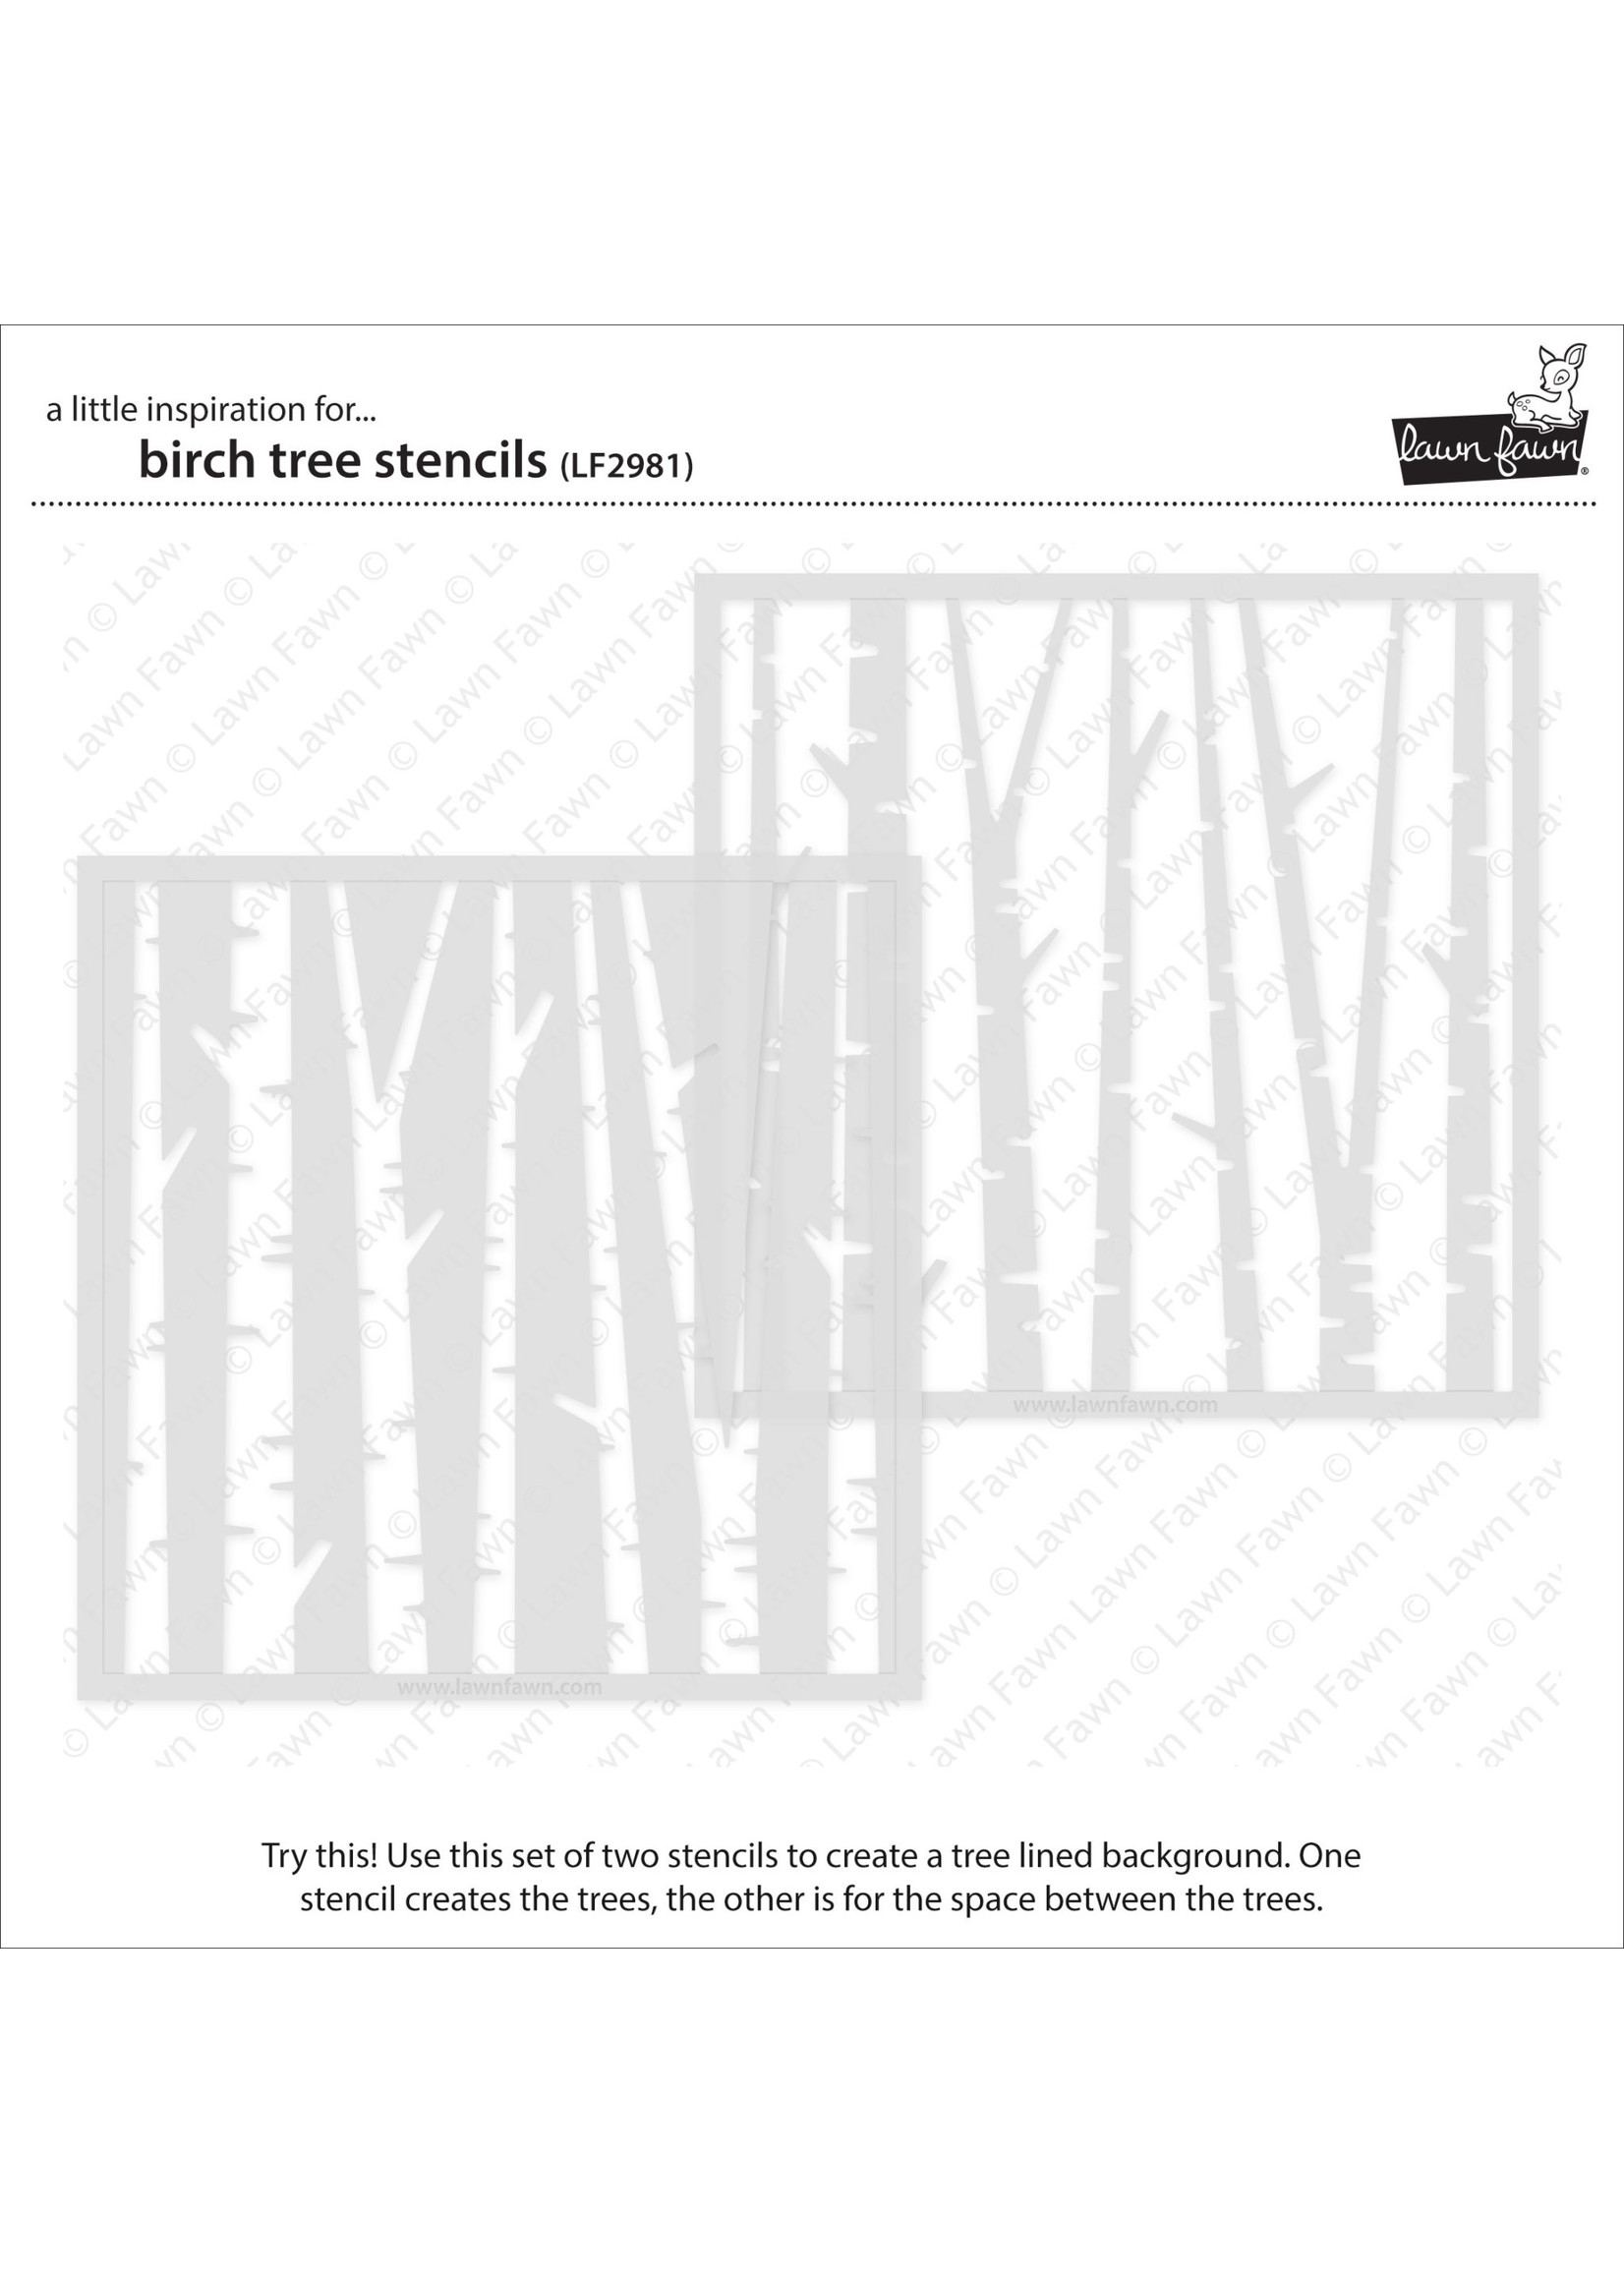 Lawn Fawn birch tree stencils